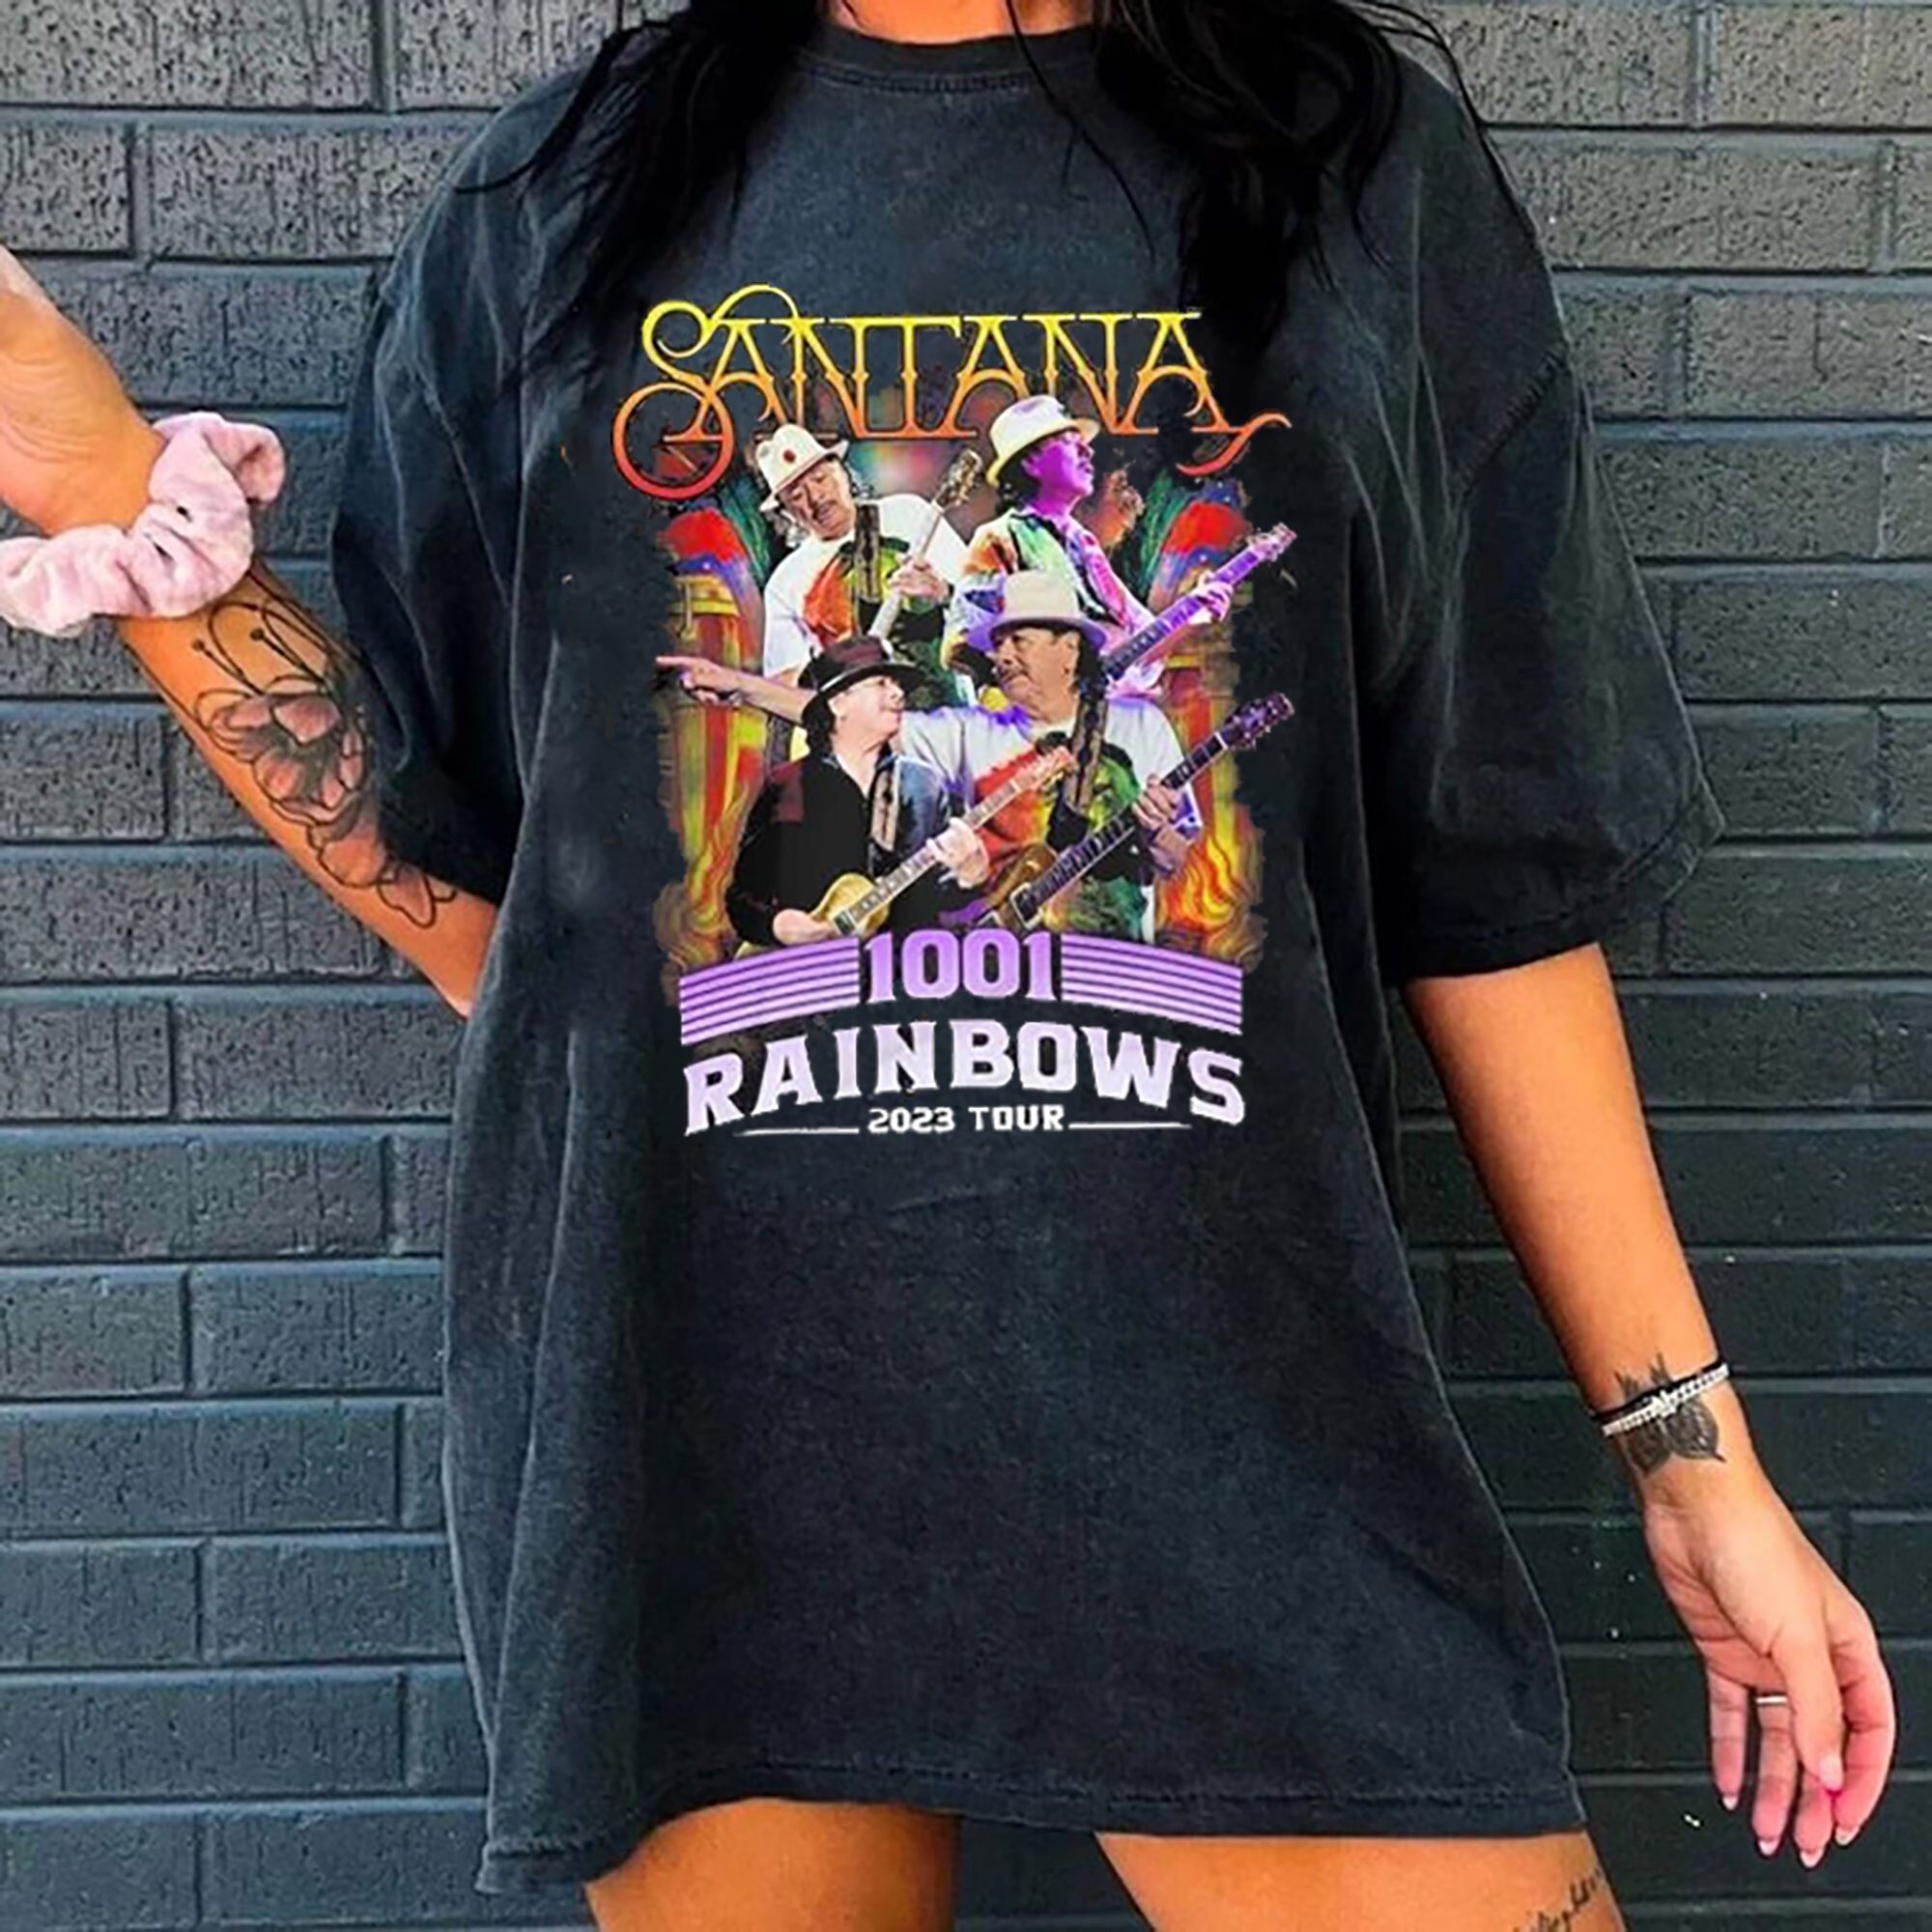 Santana tour shirt, Santana 1001 Rainbows 2023 tour Shirt 